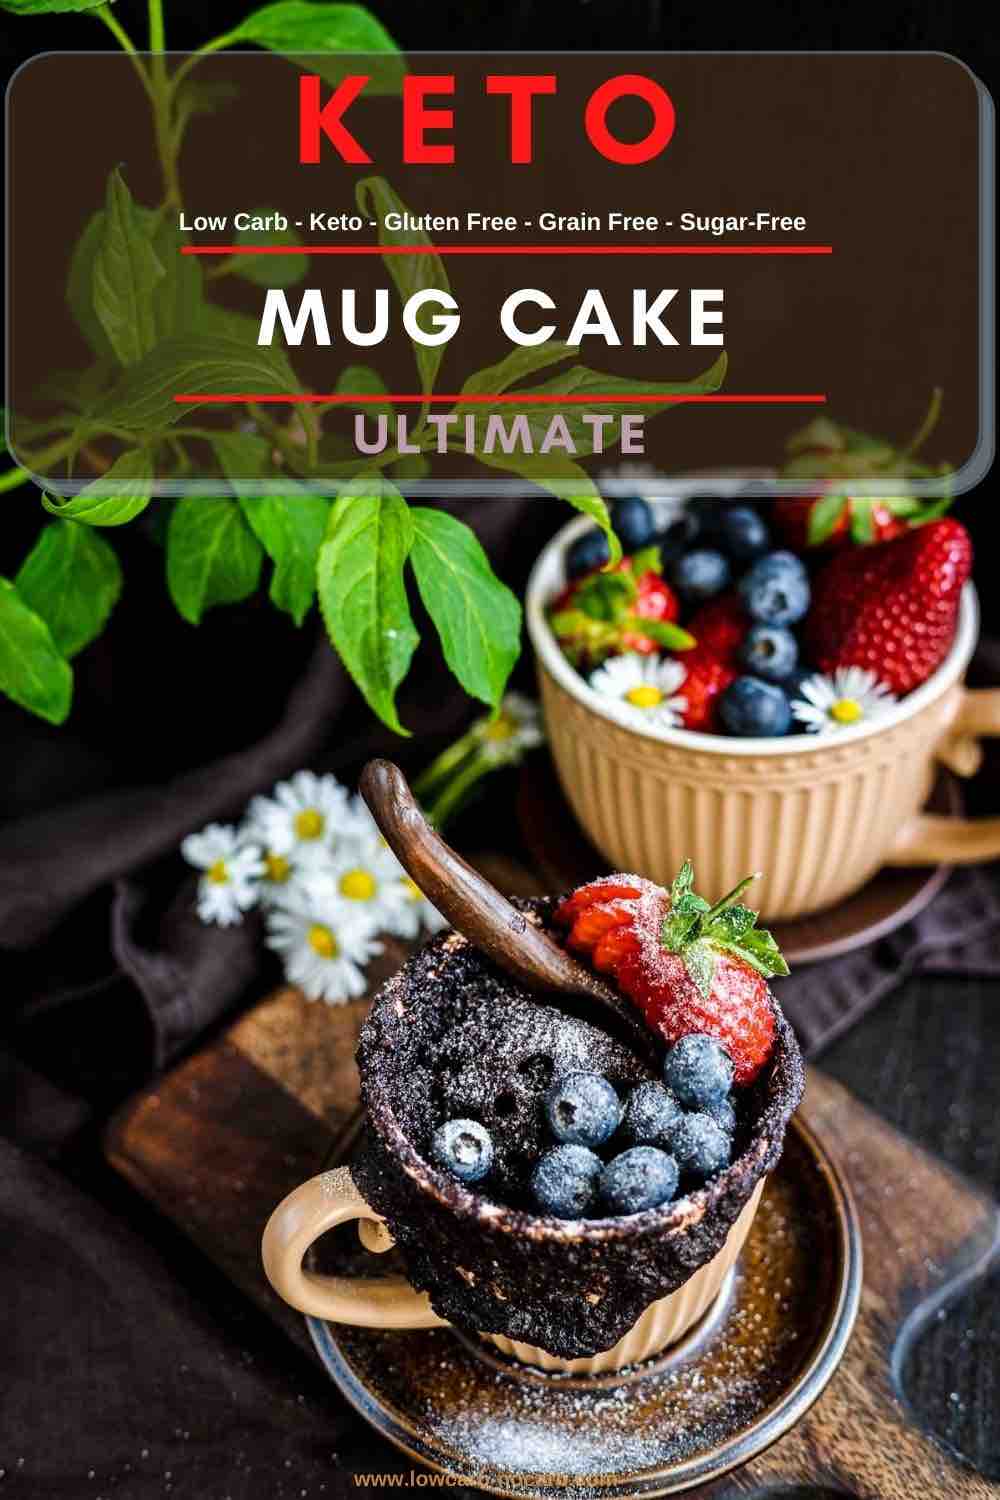 Keto Mug Cake with berries behind.